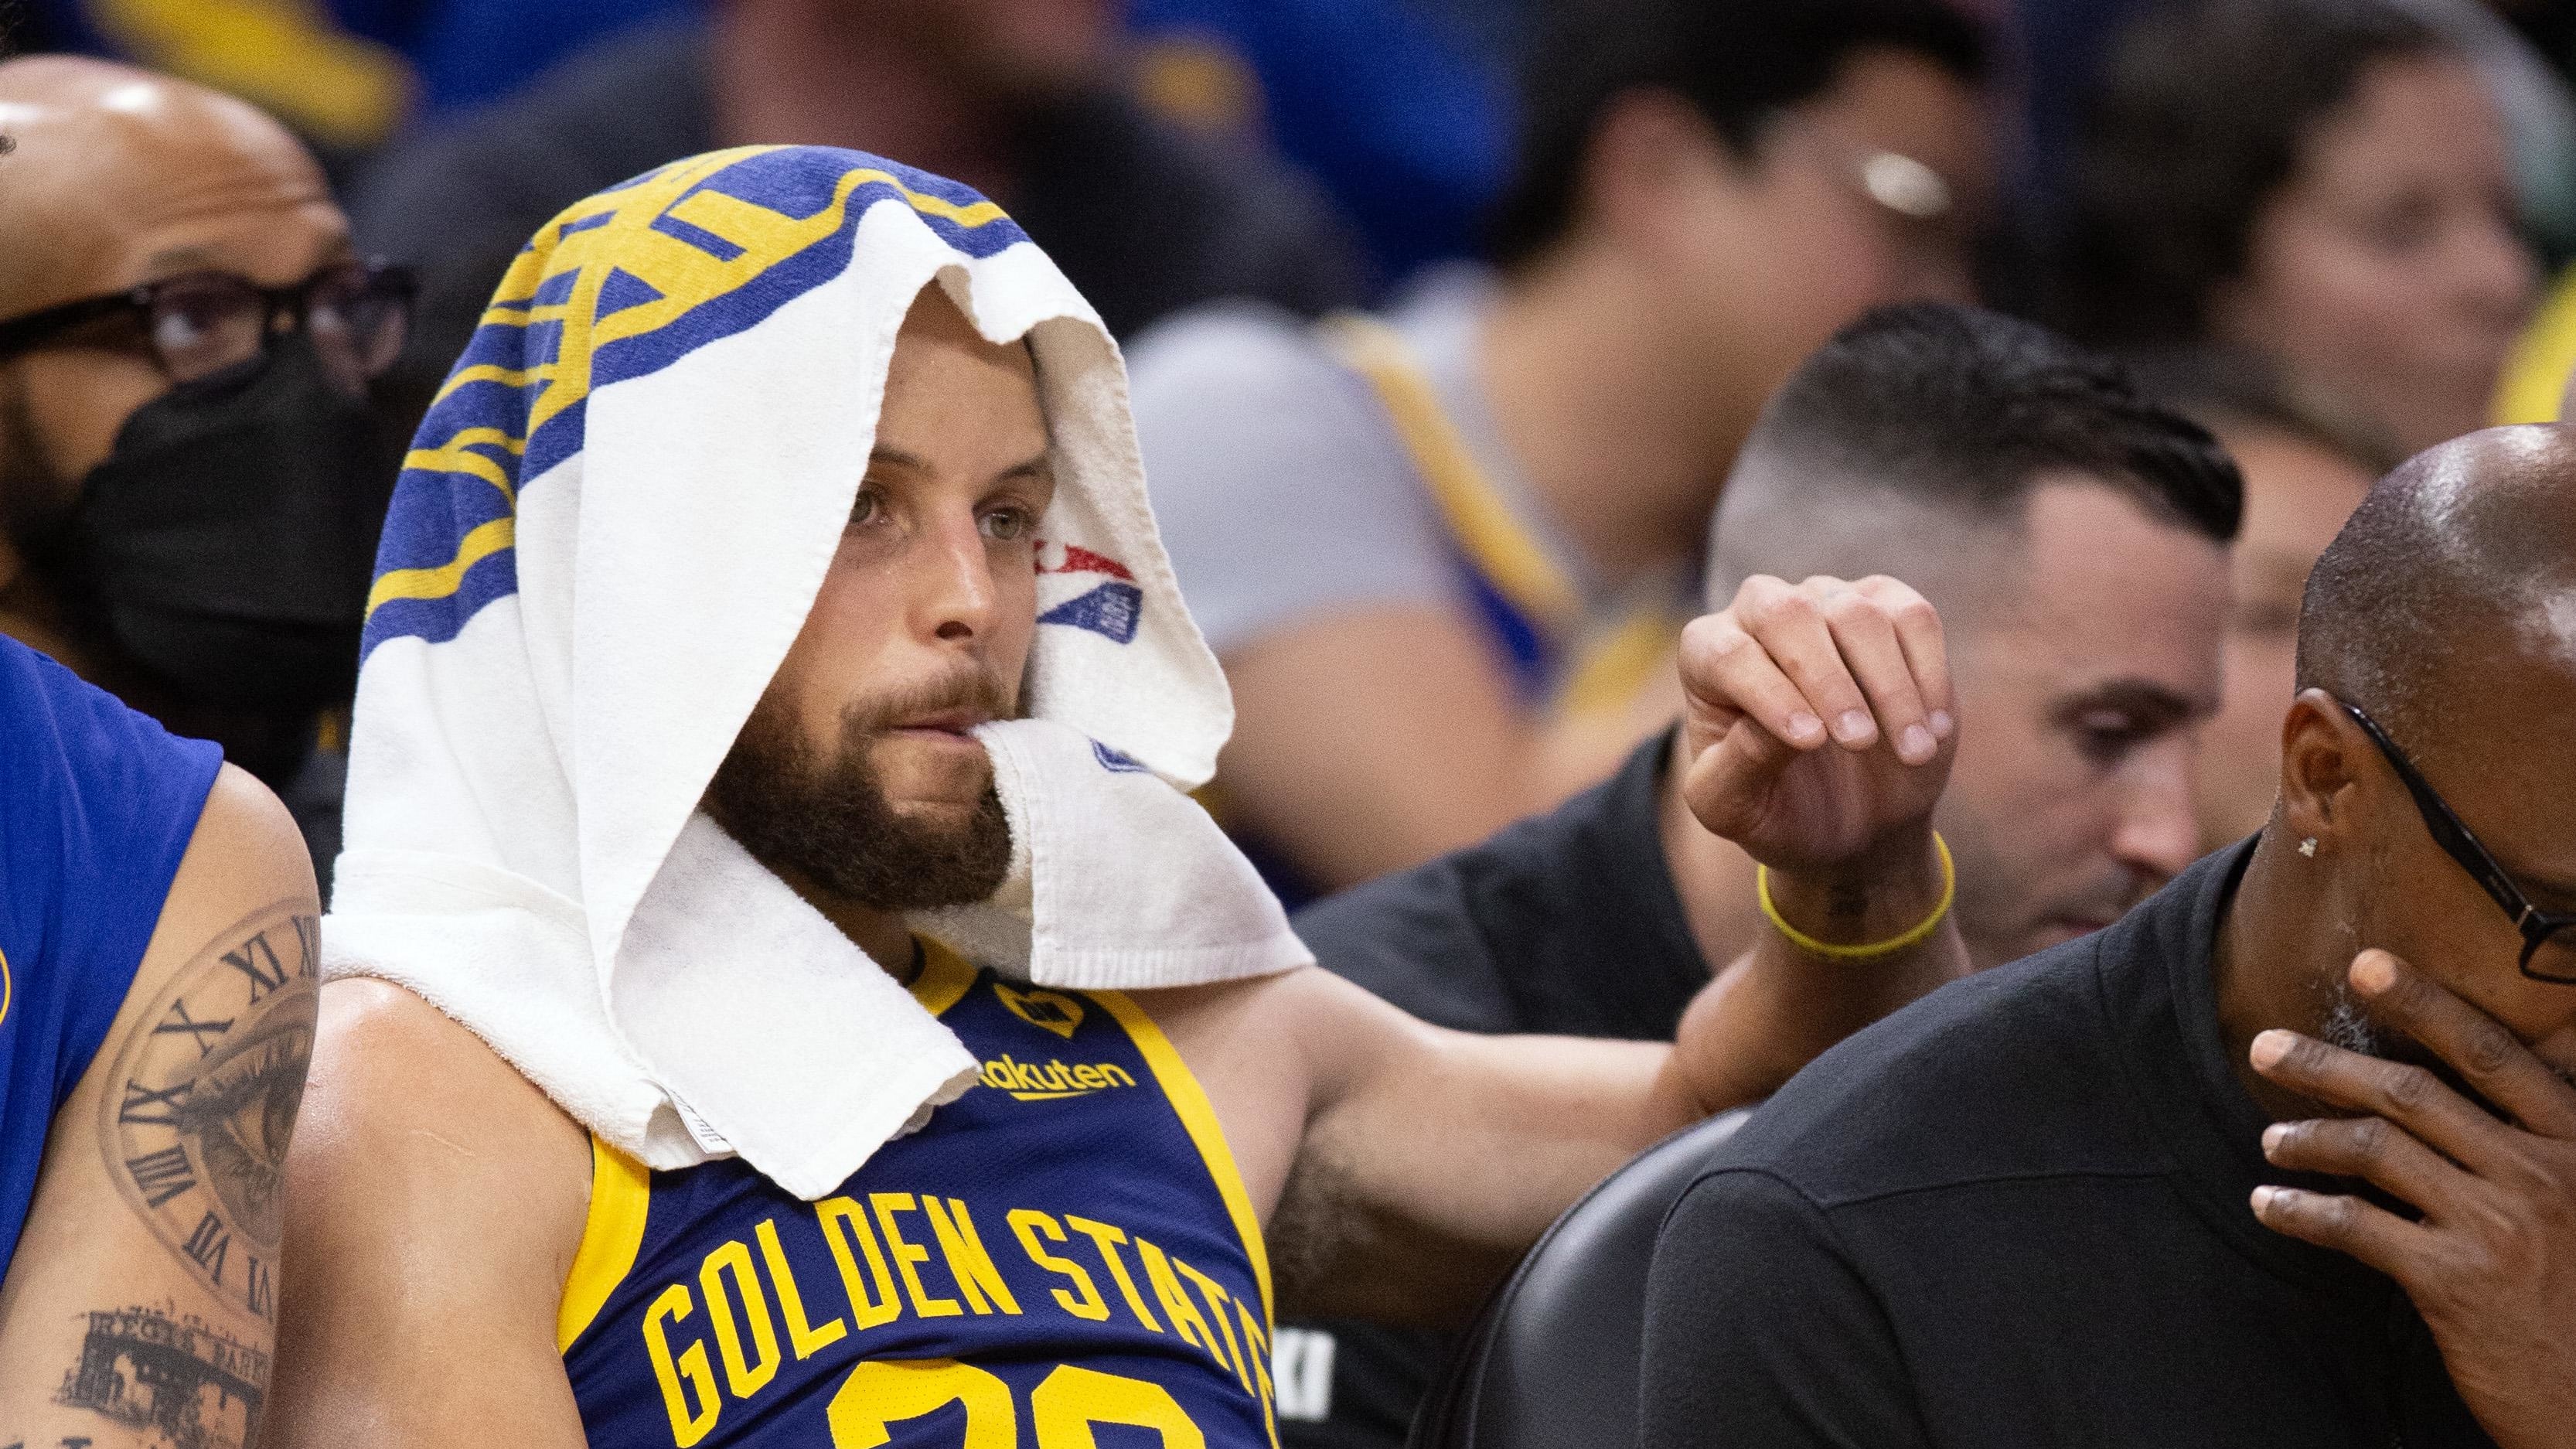 NBA Legend Makes Shocking Steph Curry Statement